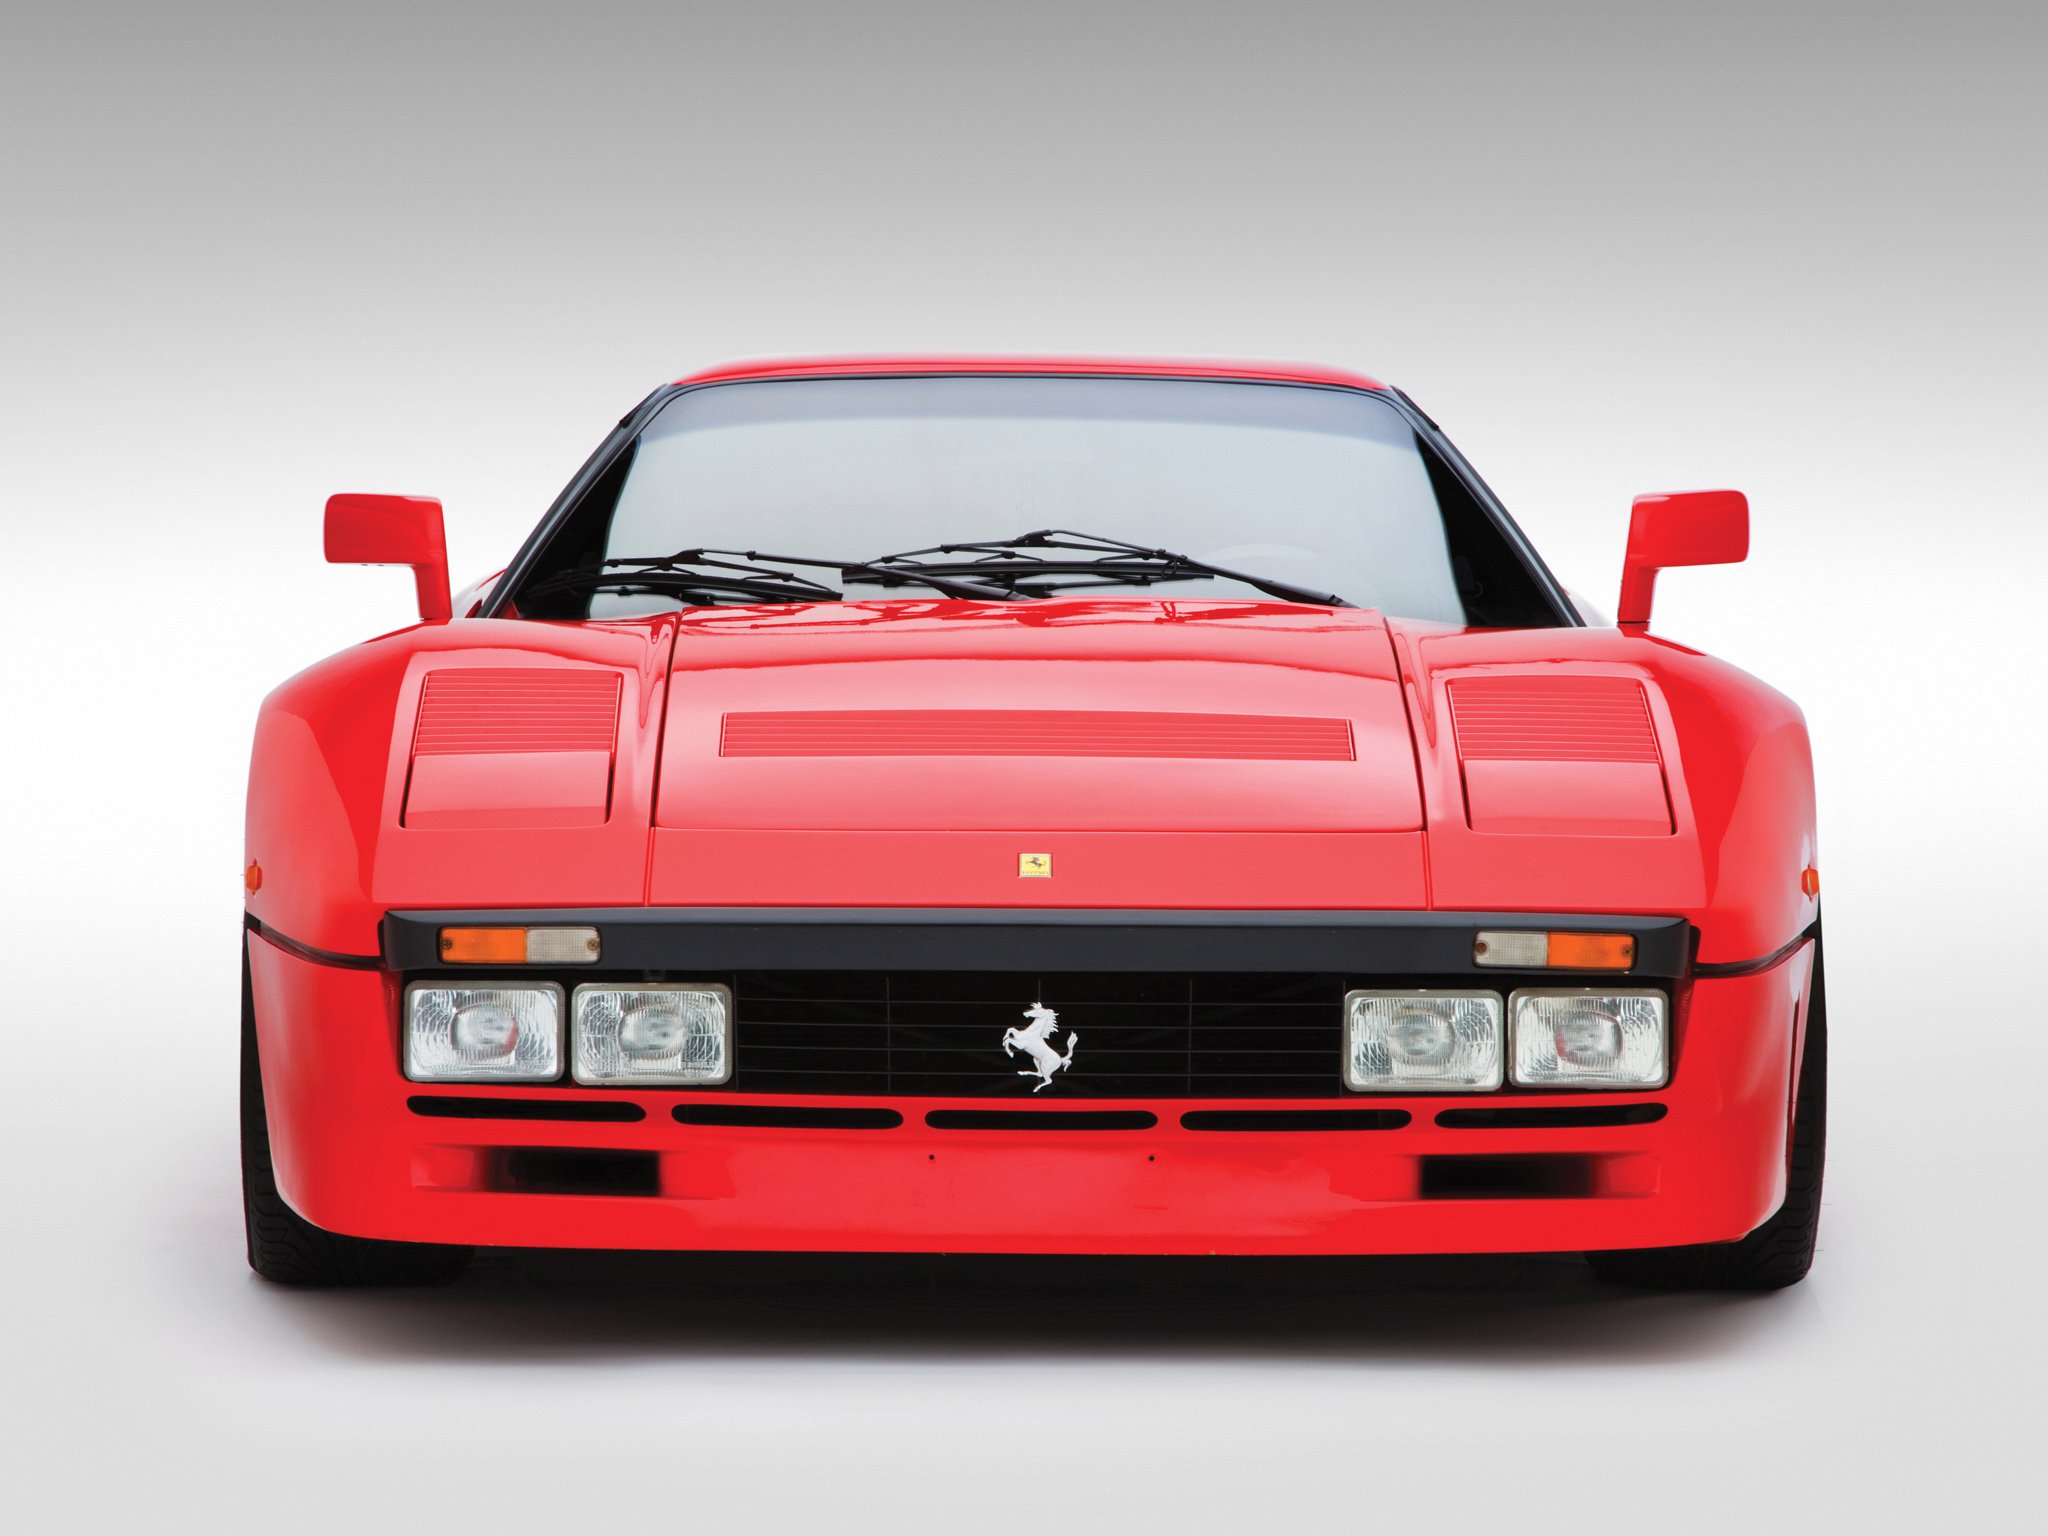 Ferrari 288. Ferrari 288 GTO. Ferrari 288 GTO 1984. Ferrari Testarossa 1984. Ferrari GTO 1984.